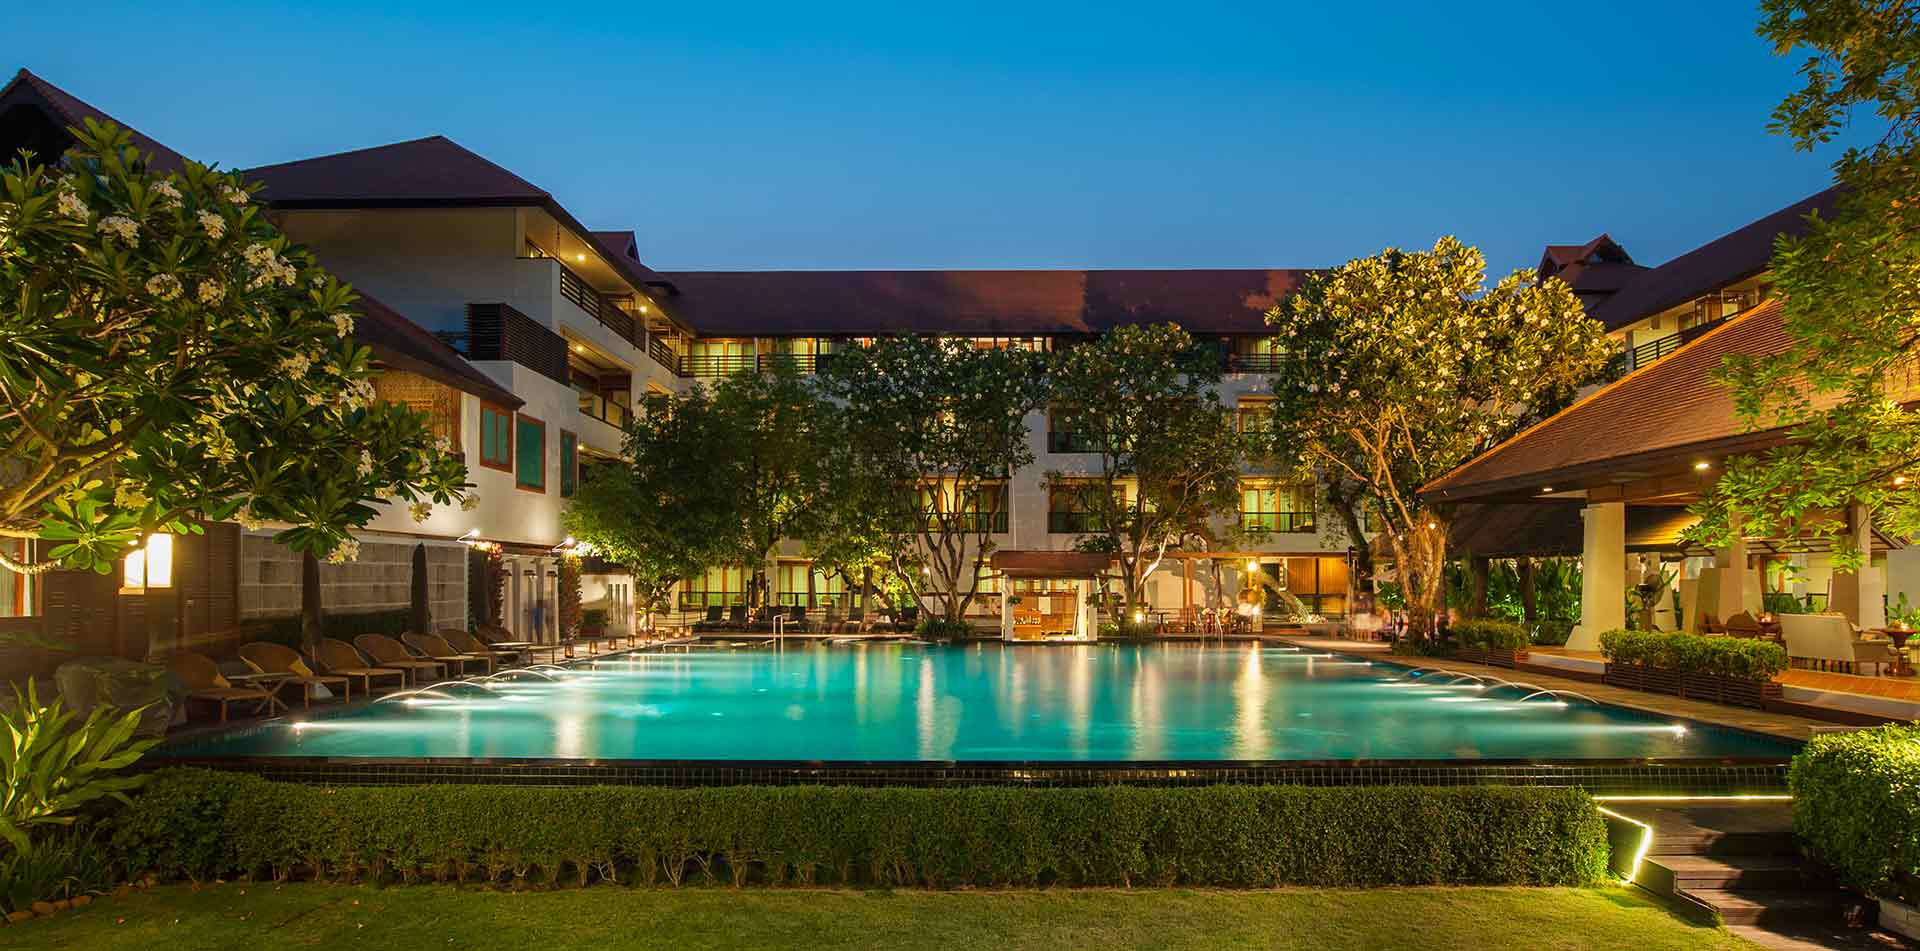 Pool at the Rati Lanna Hotel, Thailand